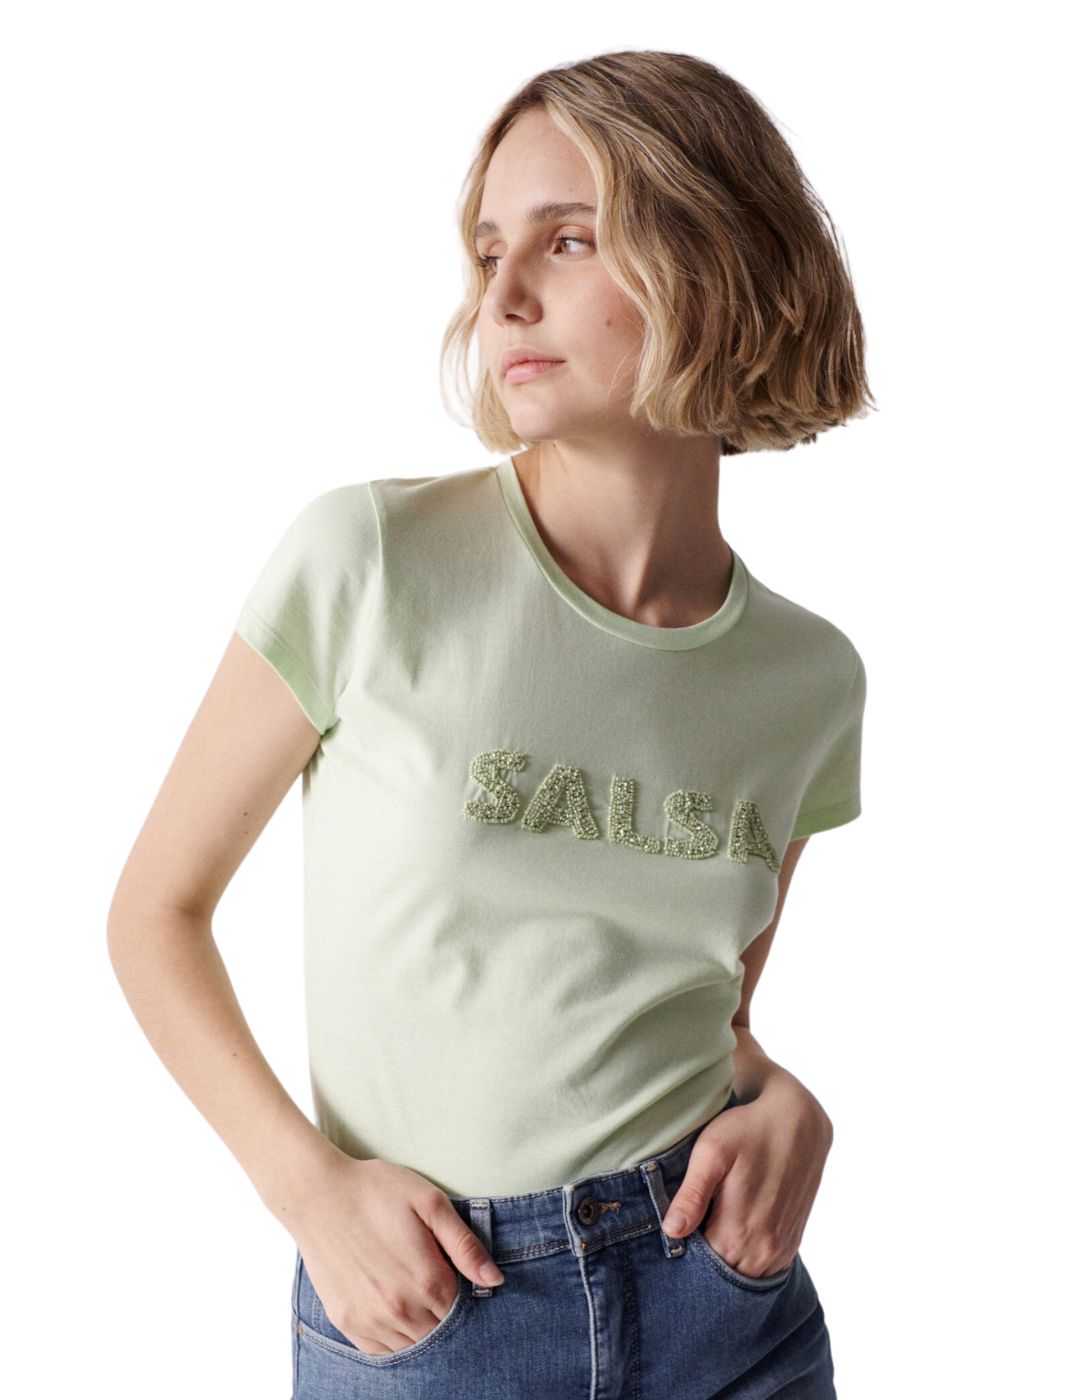 Camiseta verde Salsa branding | Bicos de Fío